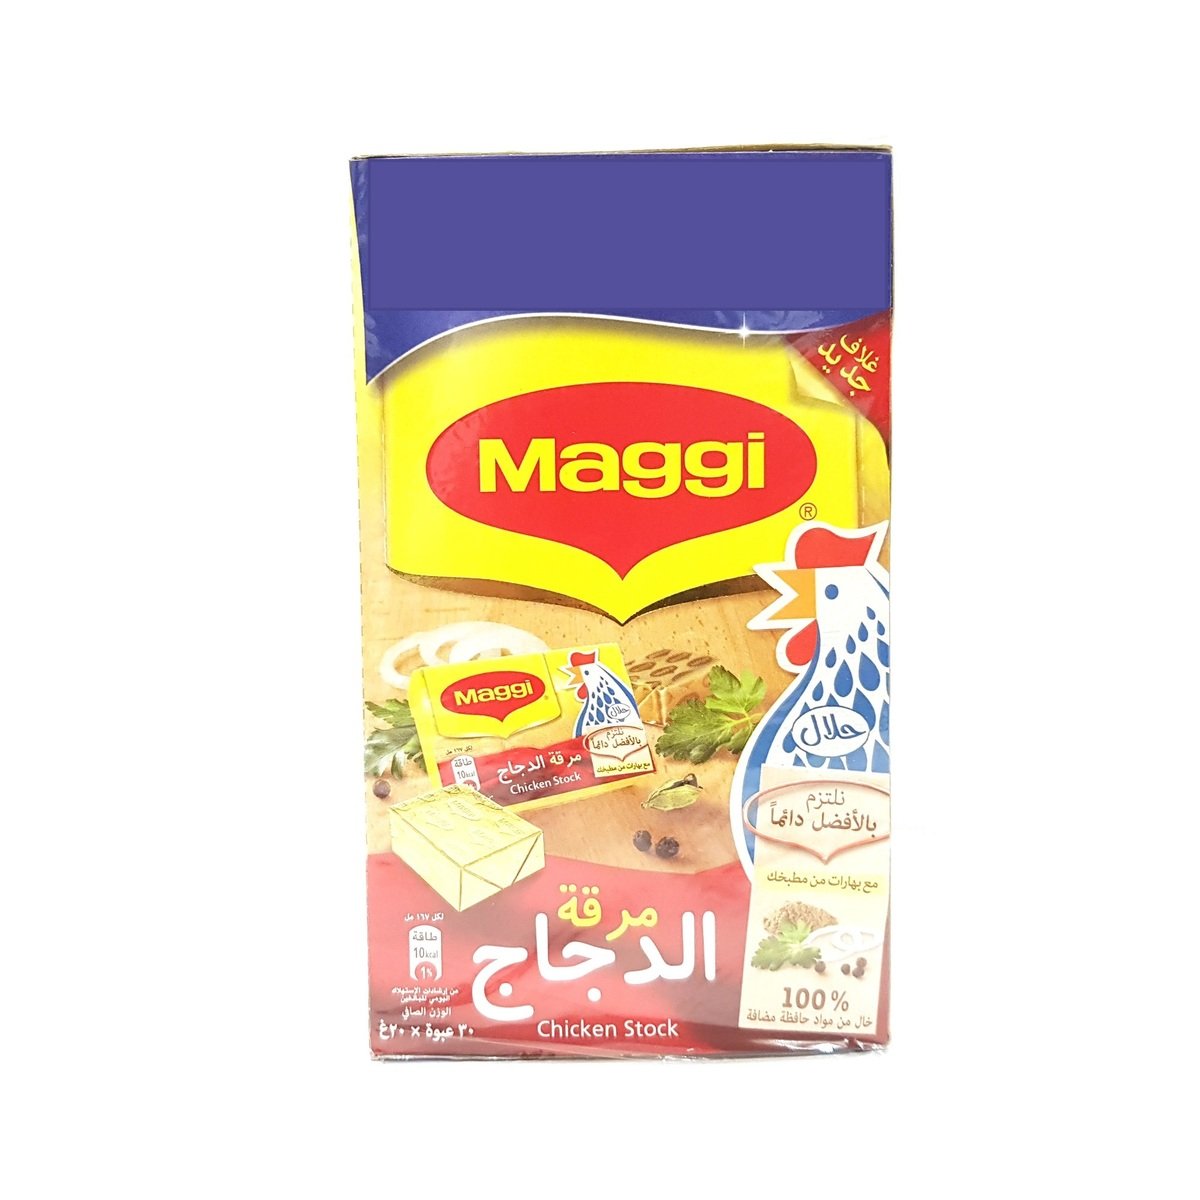 Maggi Chicken Stock 20g x 24pcs + Offer